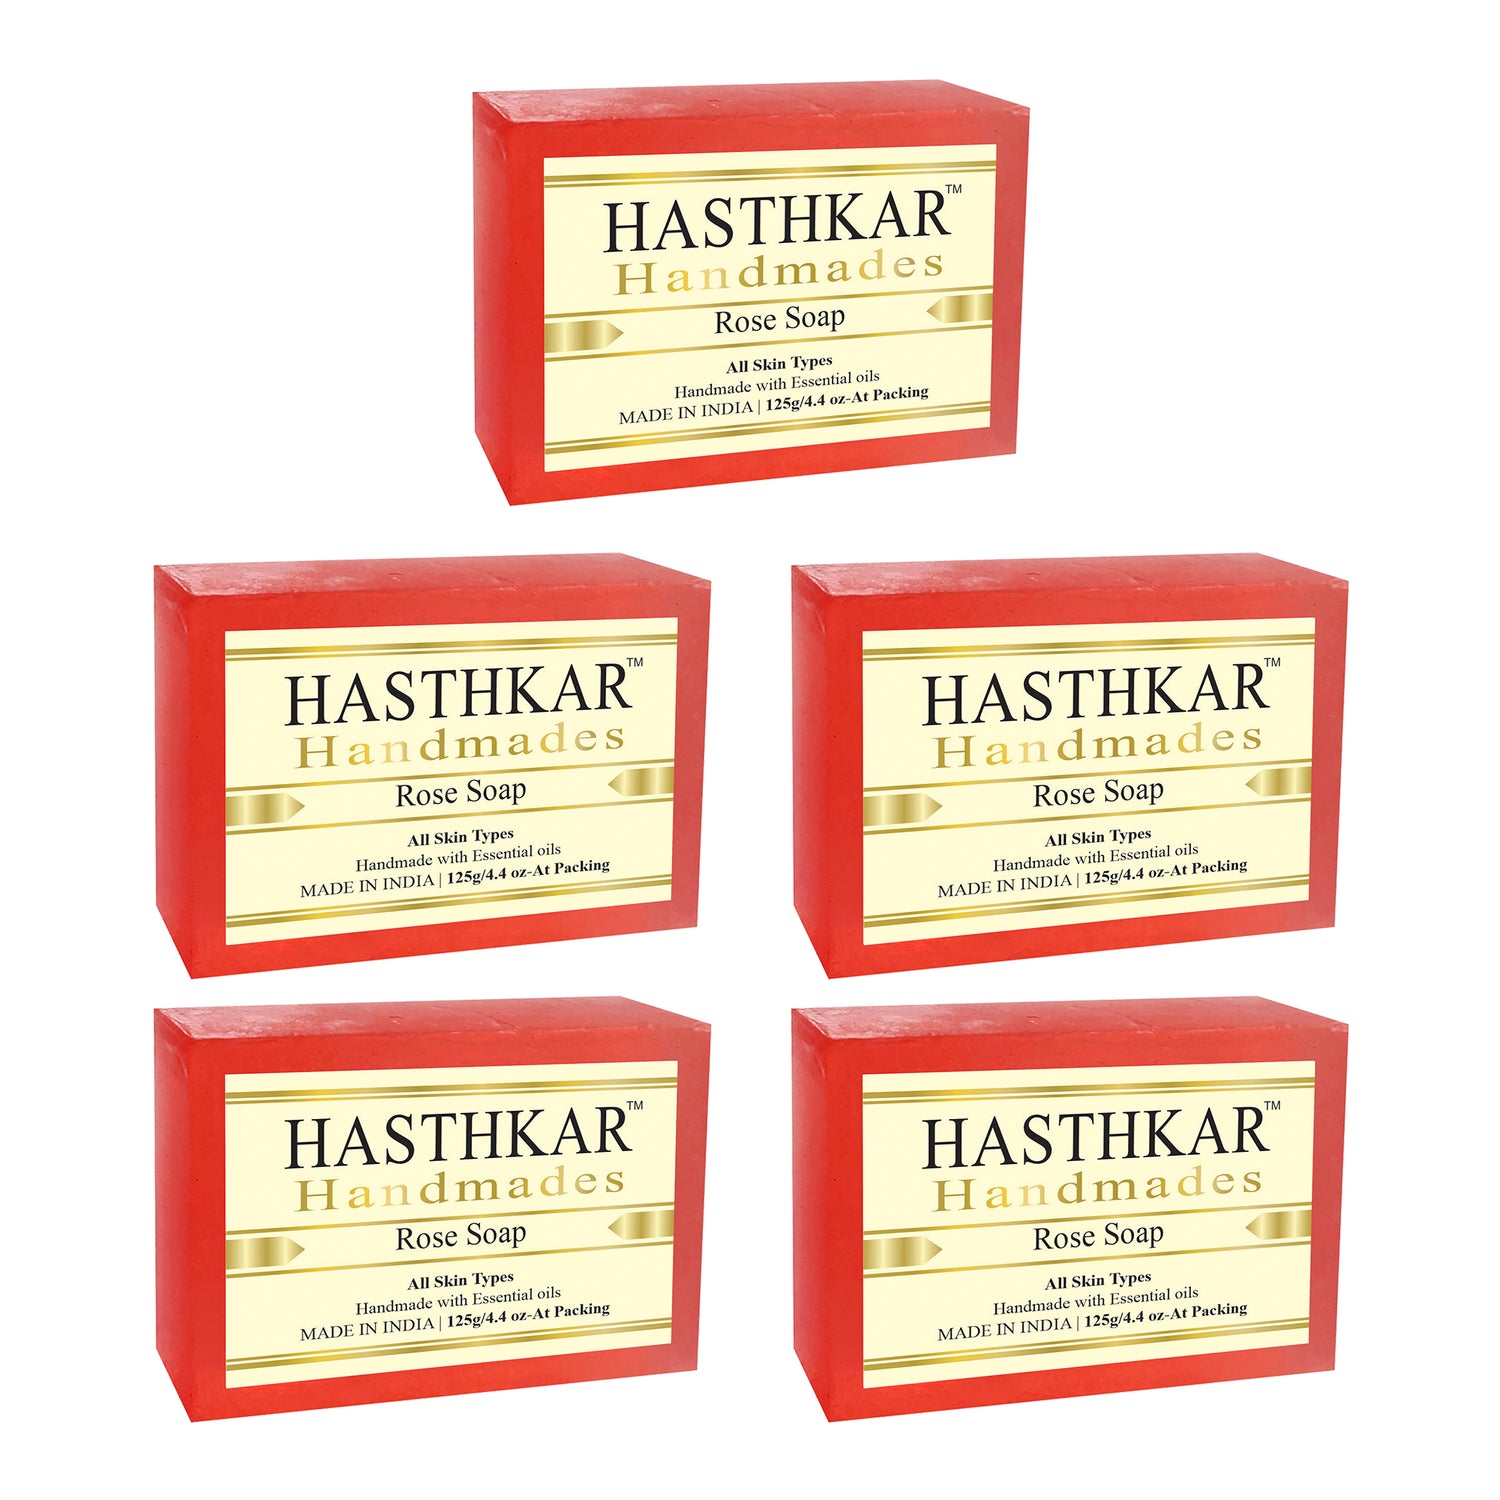 Hasthkar handmades rose bath soap men and women pack of 5